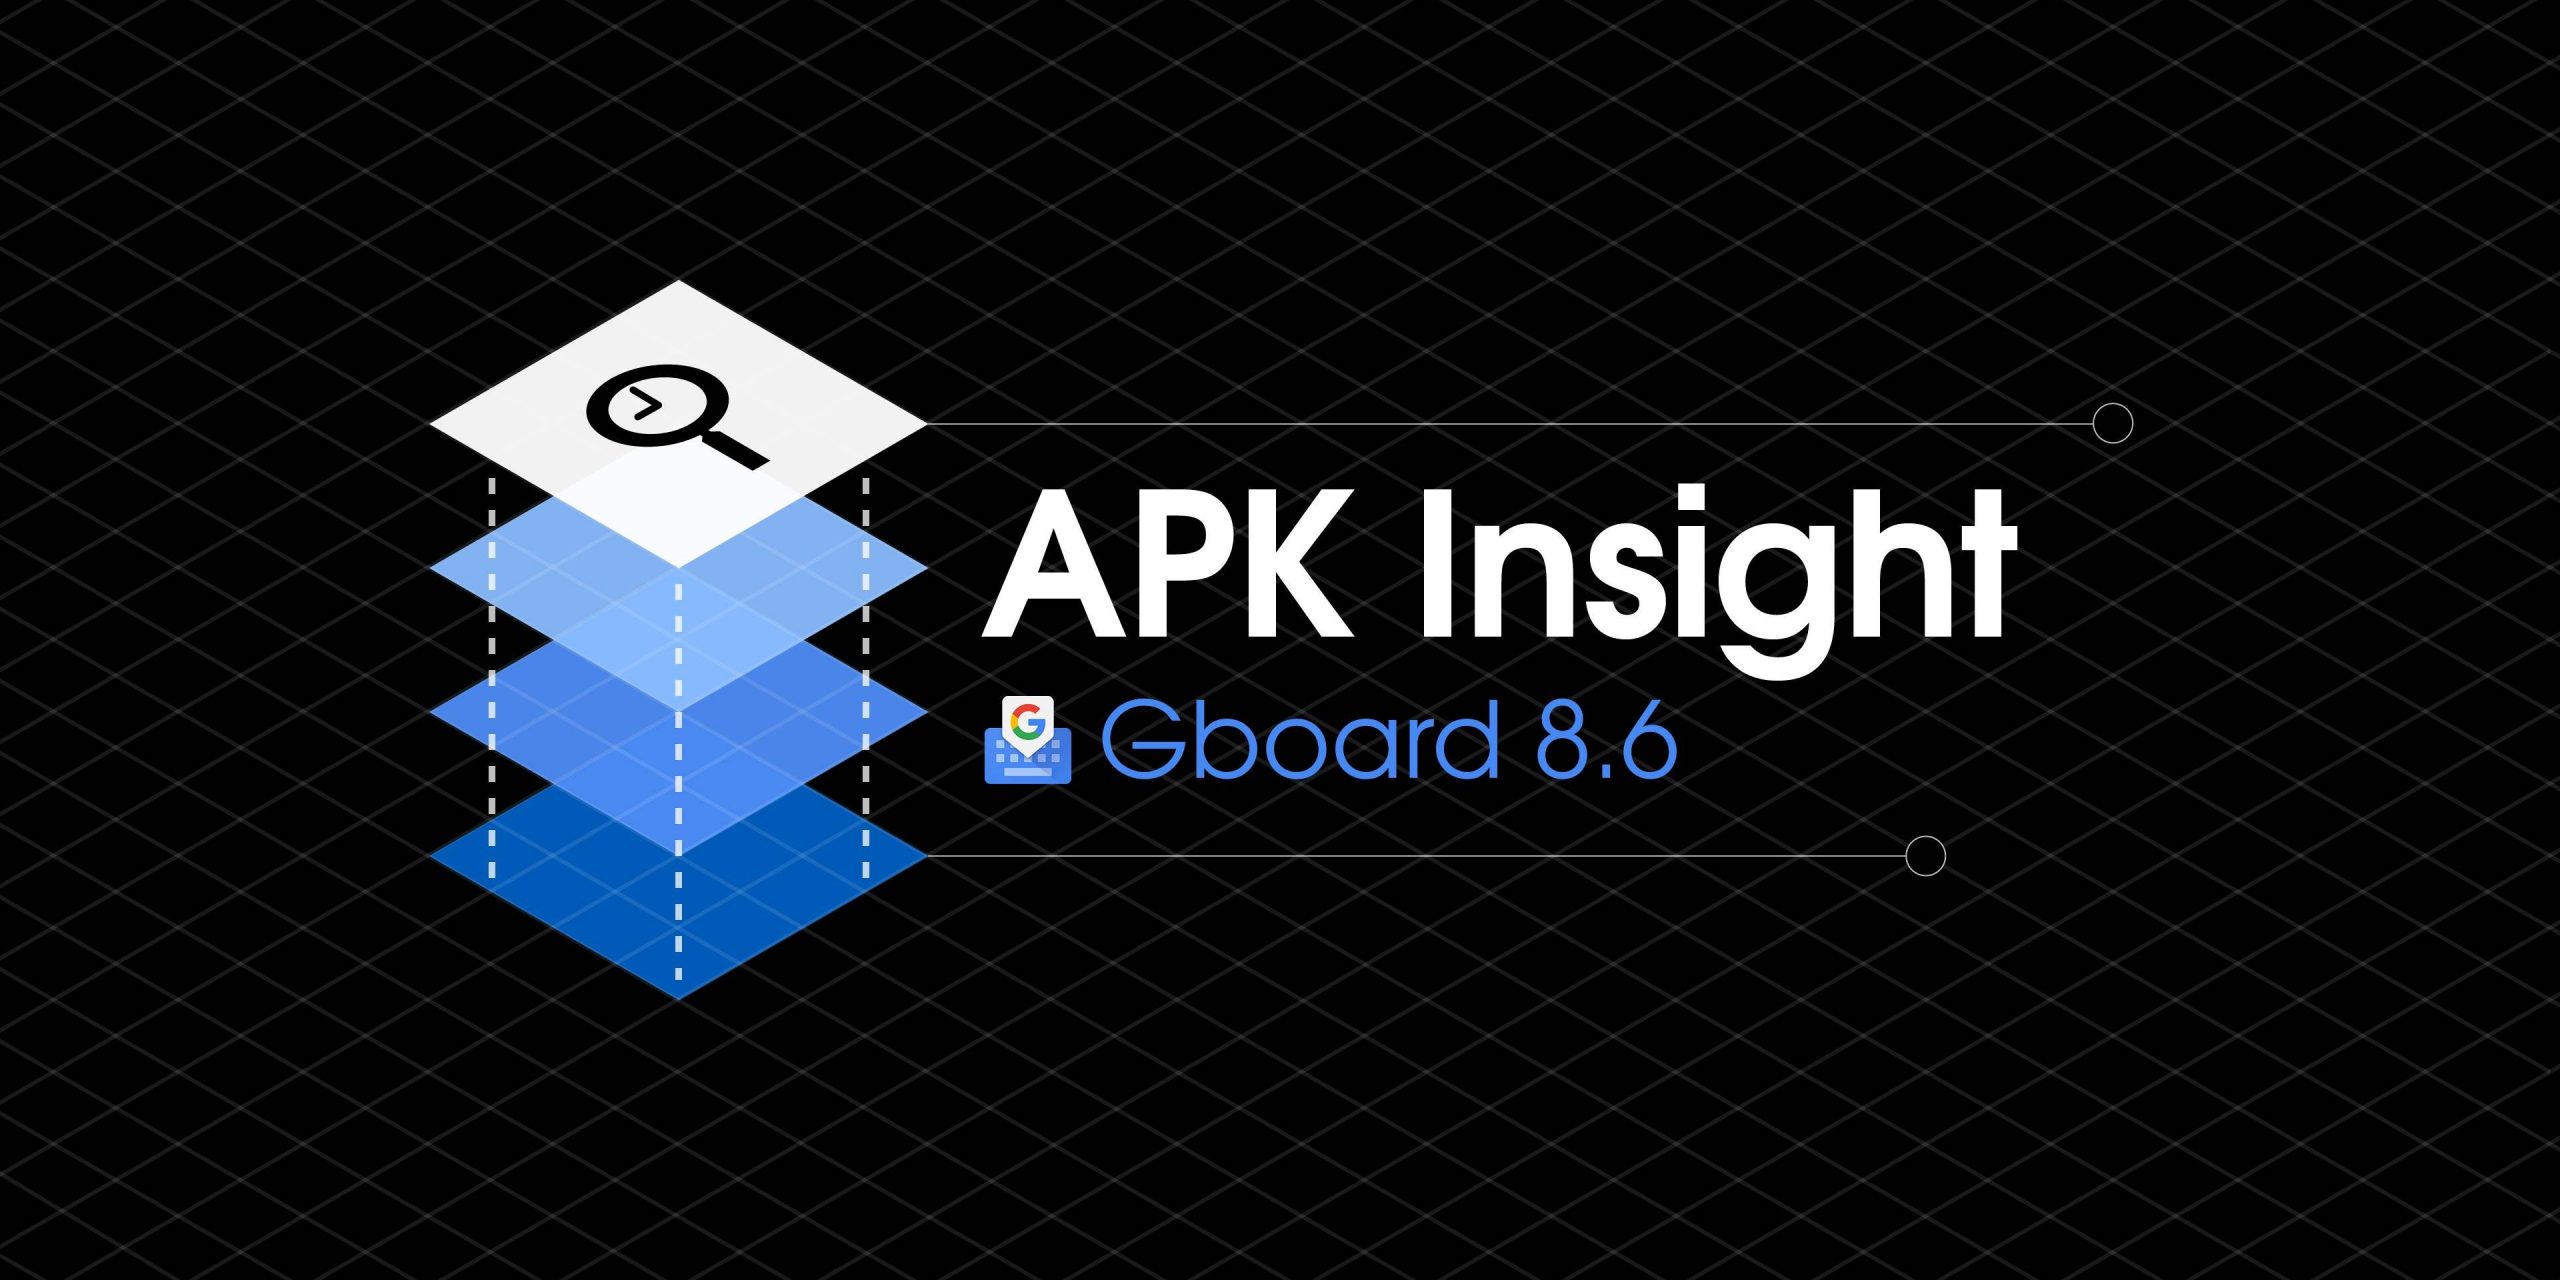 Gboard 8.6 preps 'Symbols keyboard', redesenho de adesivos e GIFs patrocinados [APK Insight]